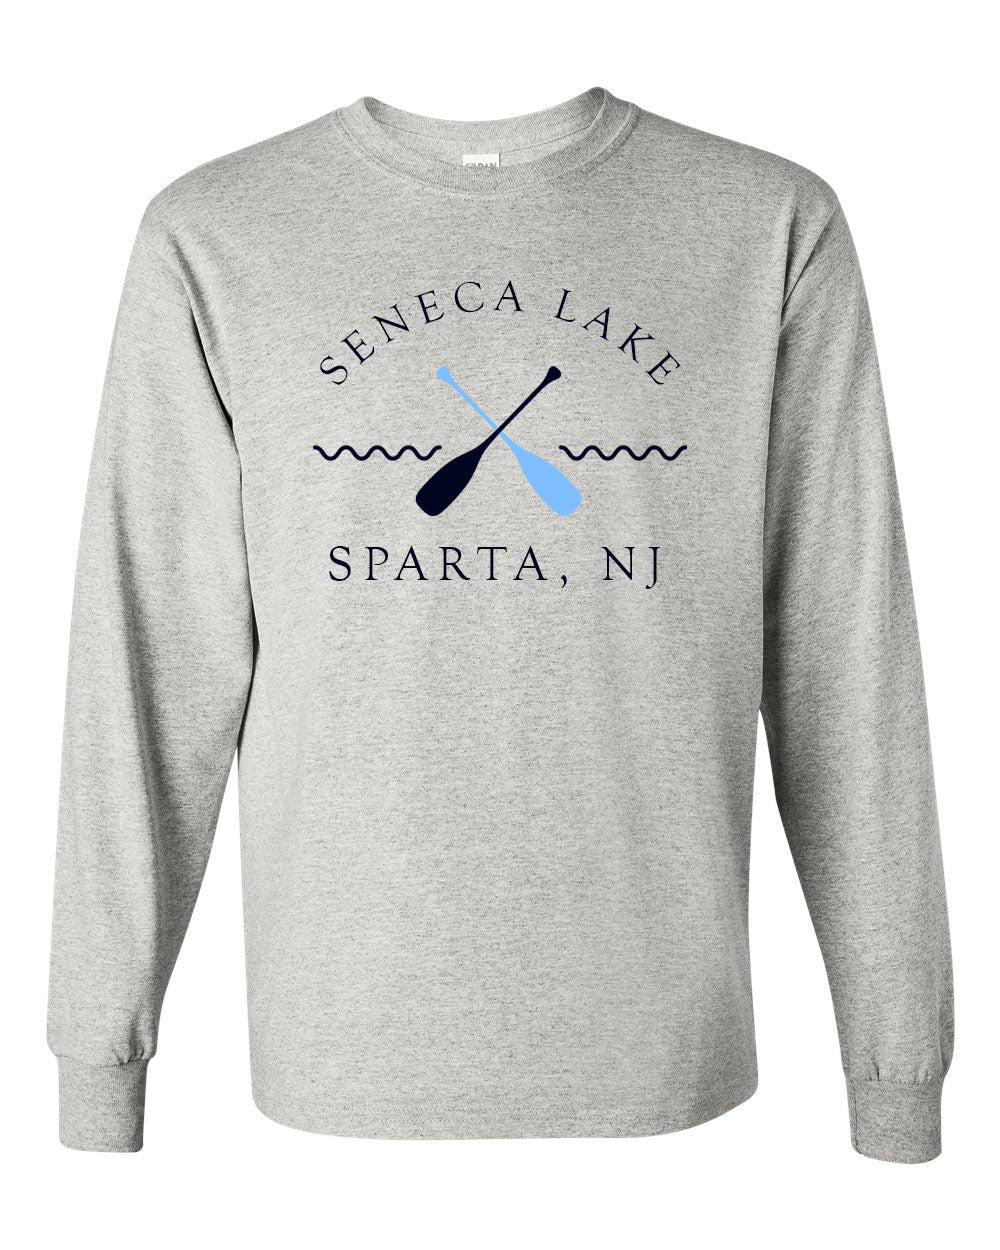 Seneca Lake Design 5 Long Sleeve Shirt